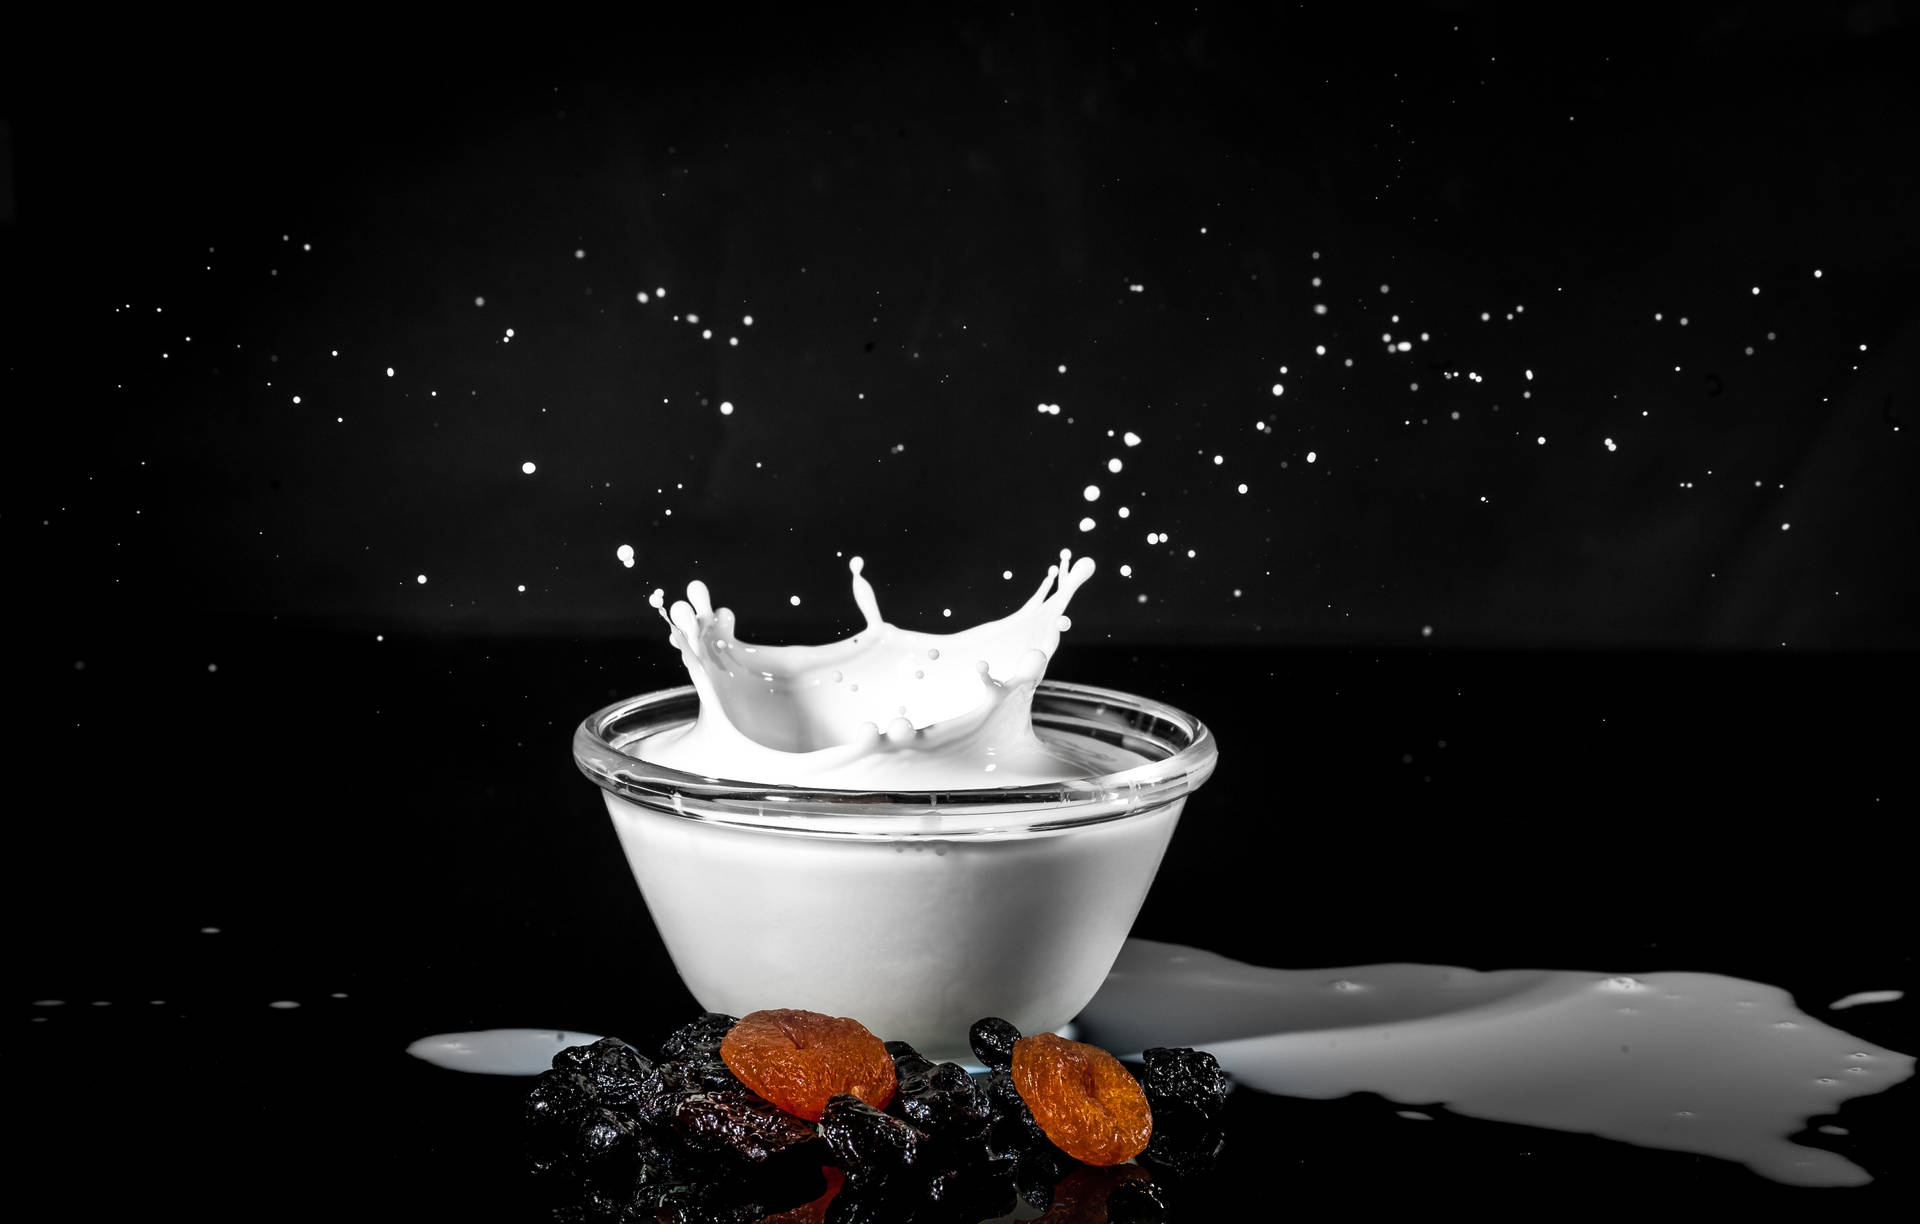 Spilt Milk Splash Captured In Glass Bowl Background